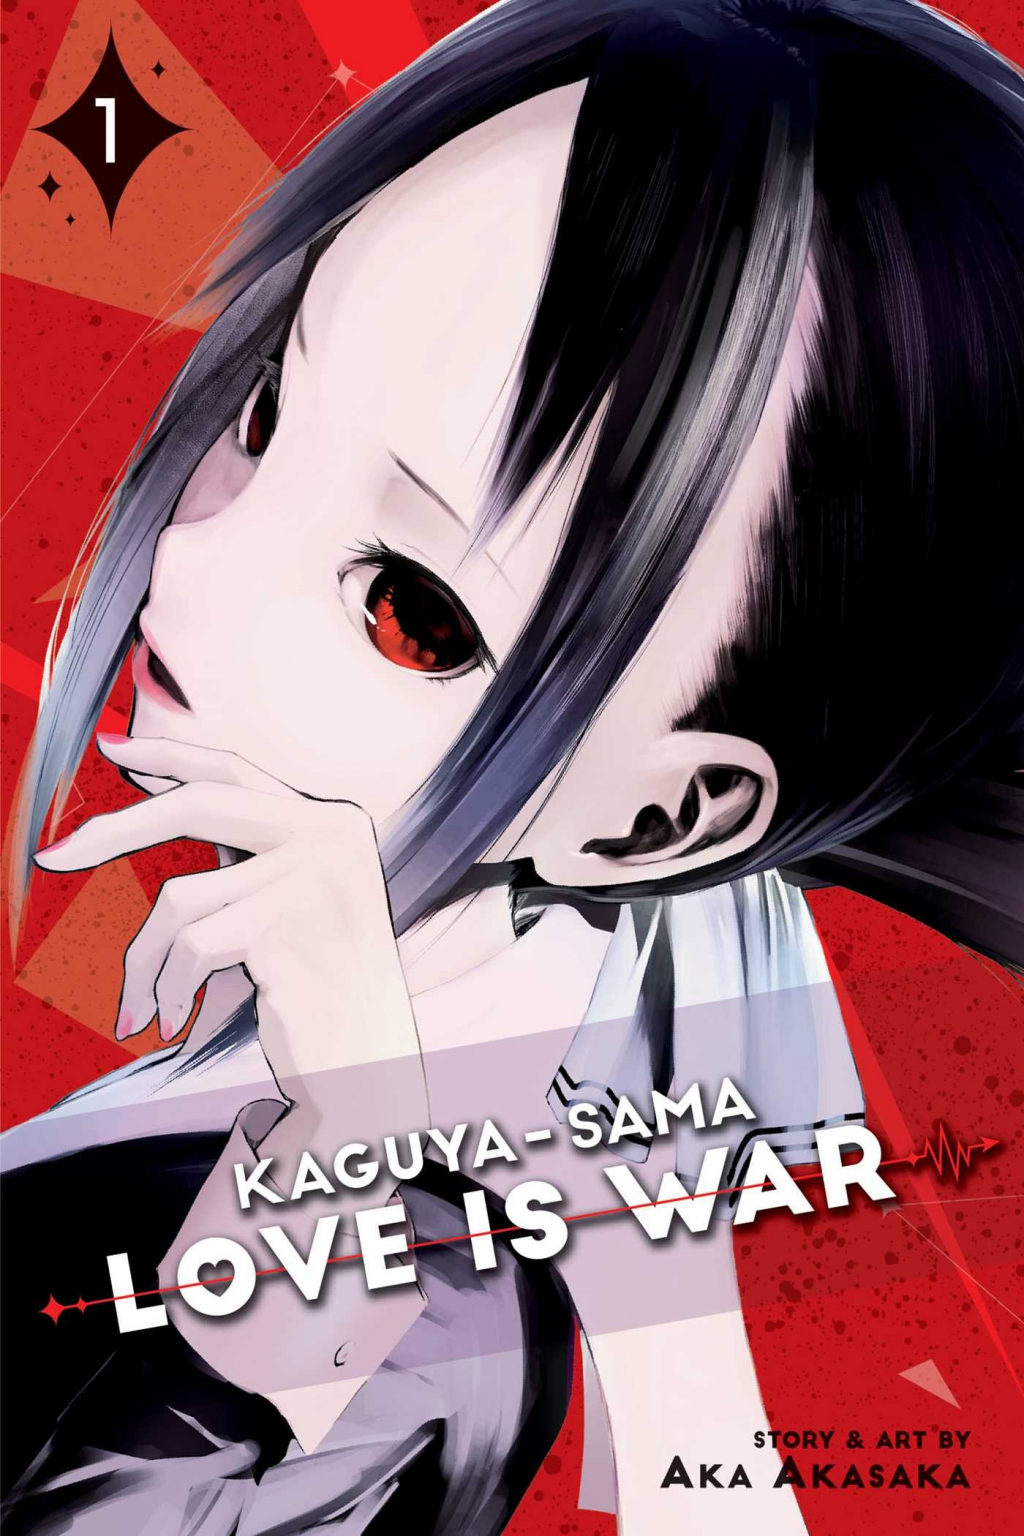 Kaguya-sama: Love Is War Movie U.S. Release Date Confirmed in Trailer